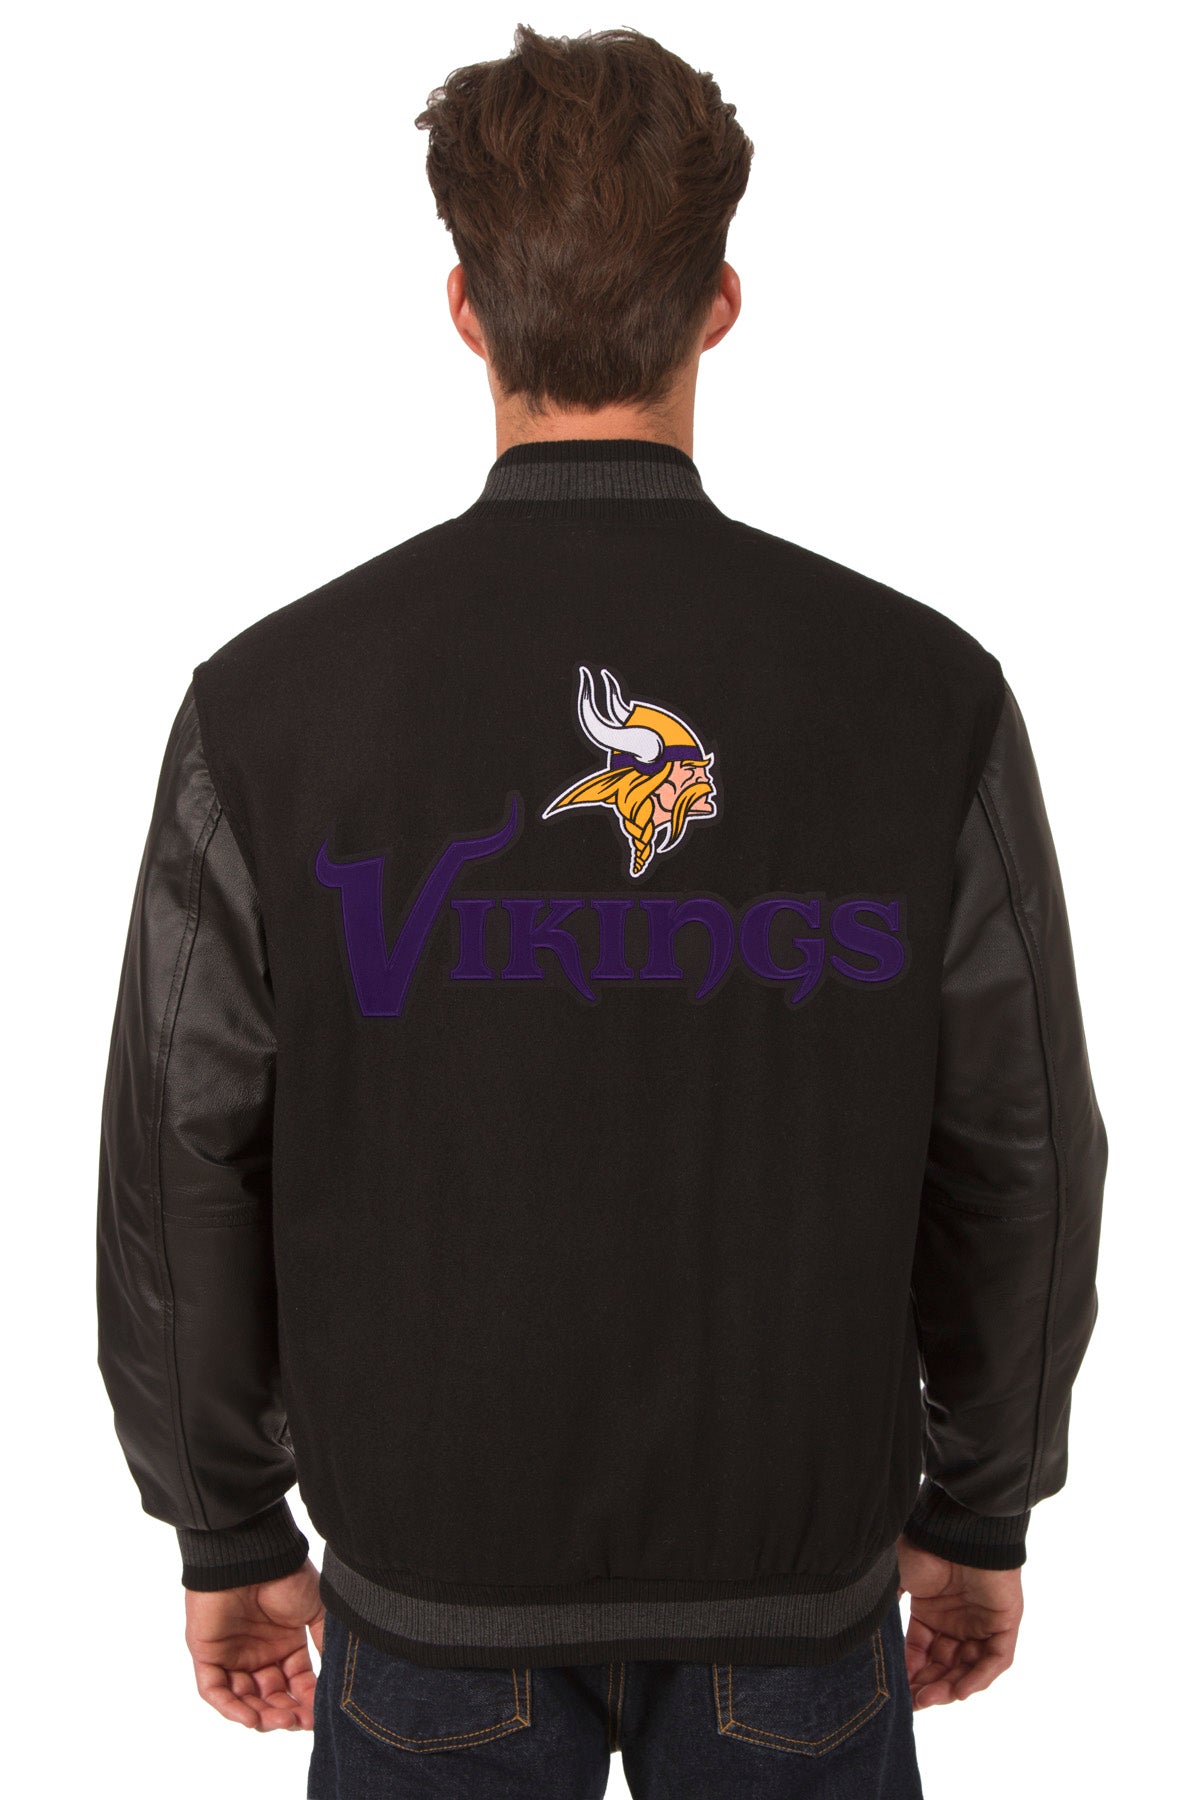 Minnesota Vikings Reversible Wool and Leather Jacket